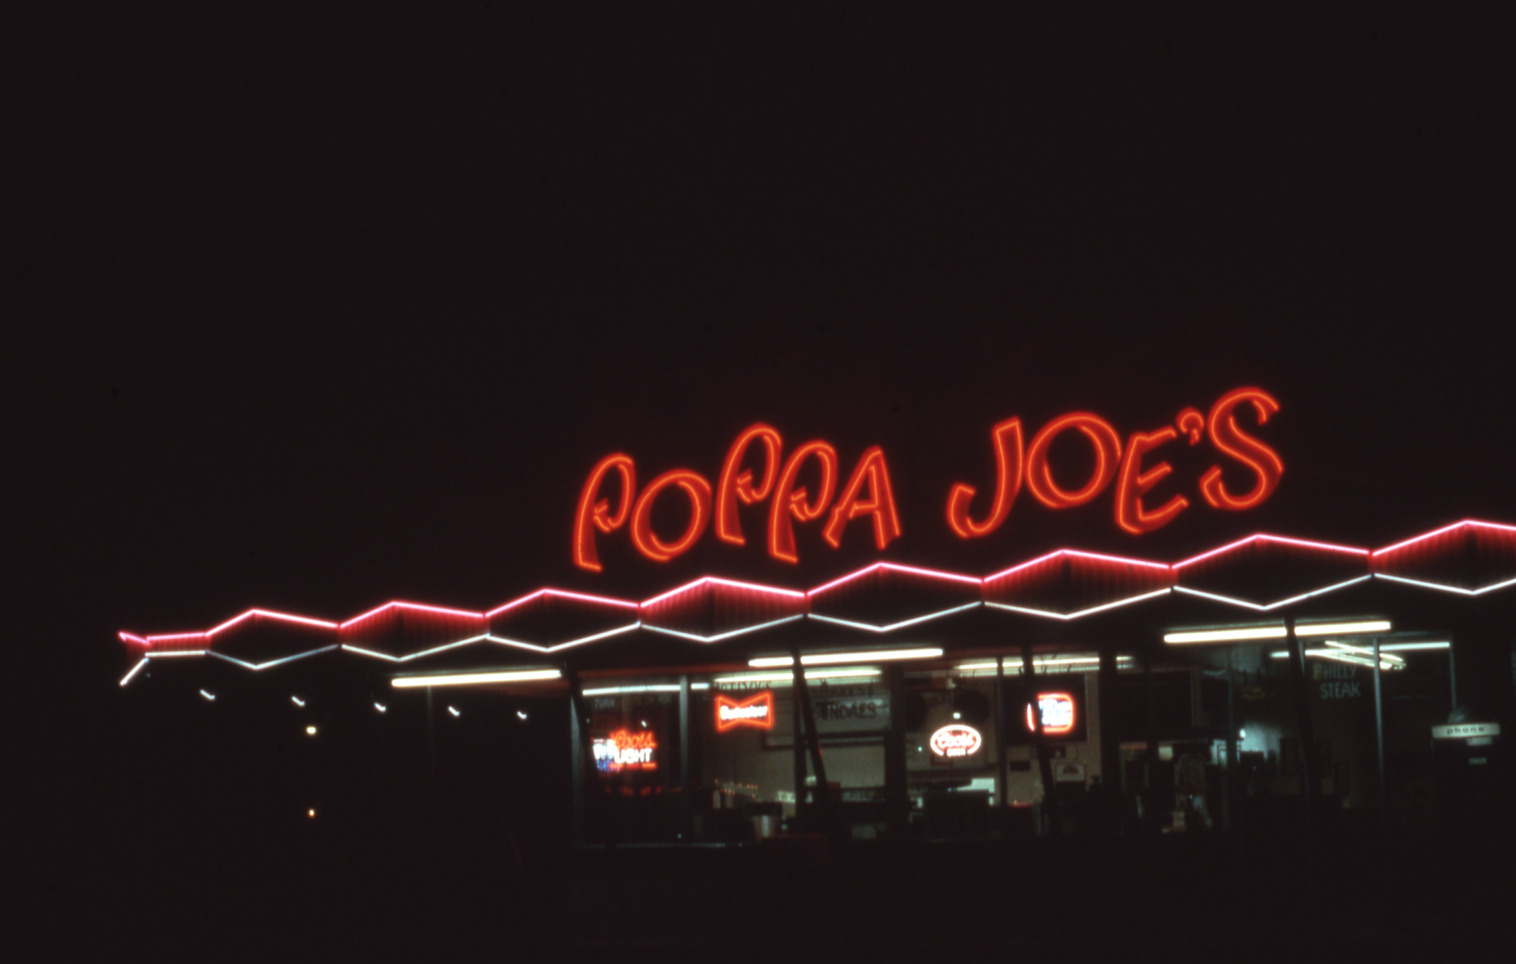 Poppa Joe's restaurant roof mounted and wall signs, Las Vegas, Nevada: photographic print